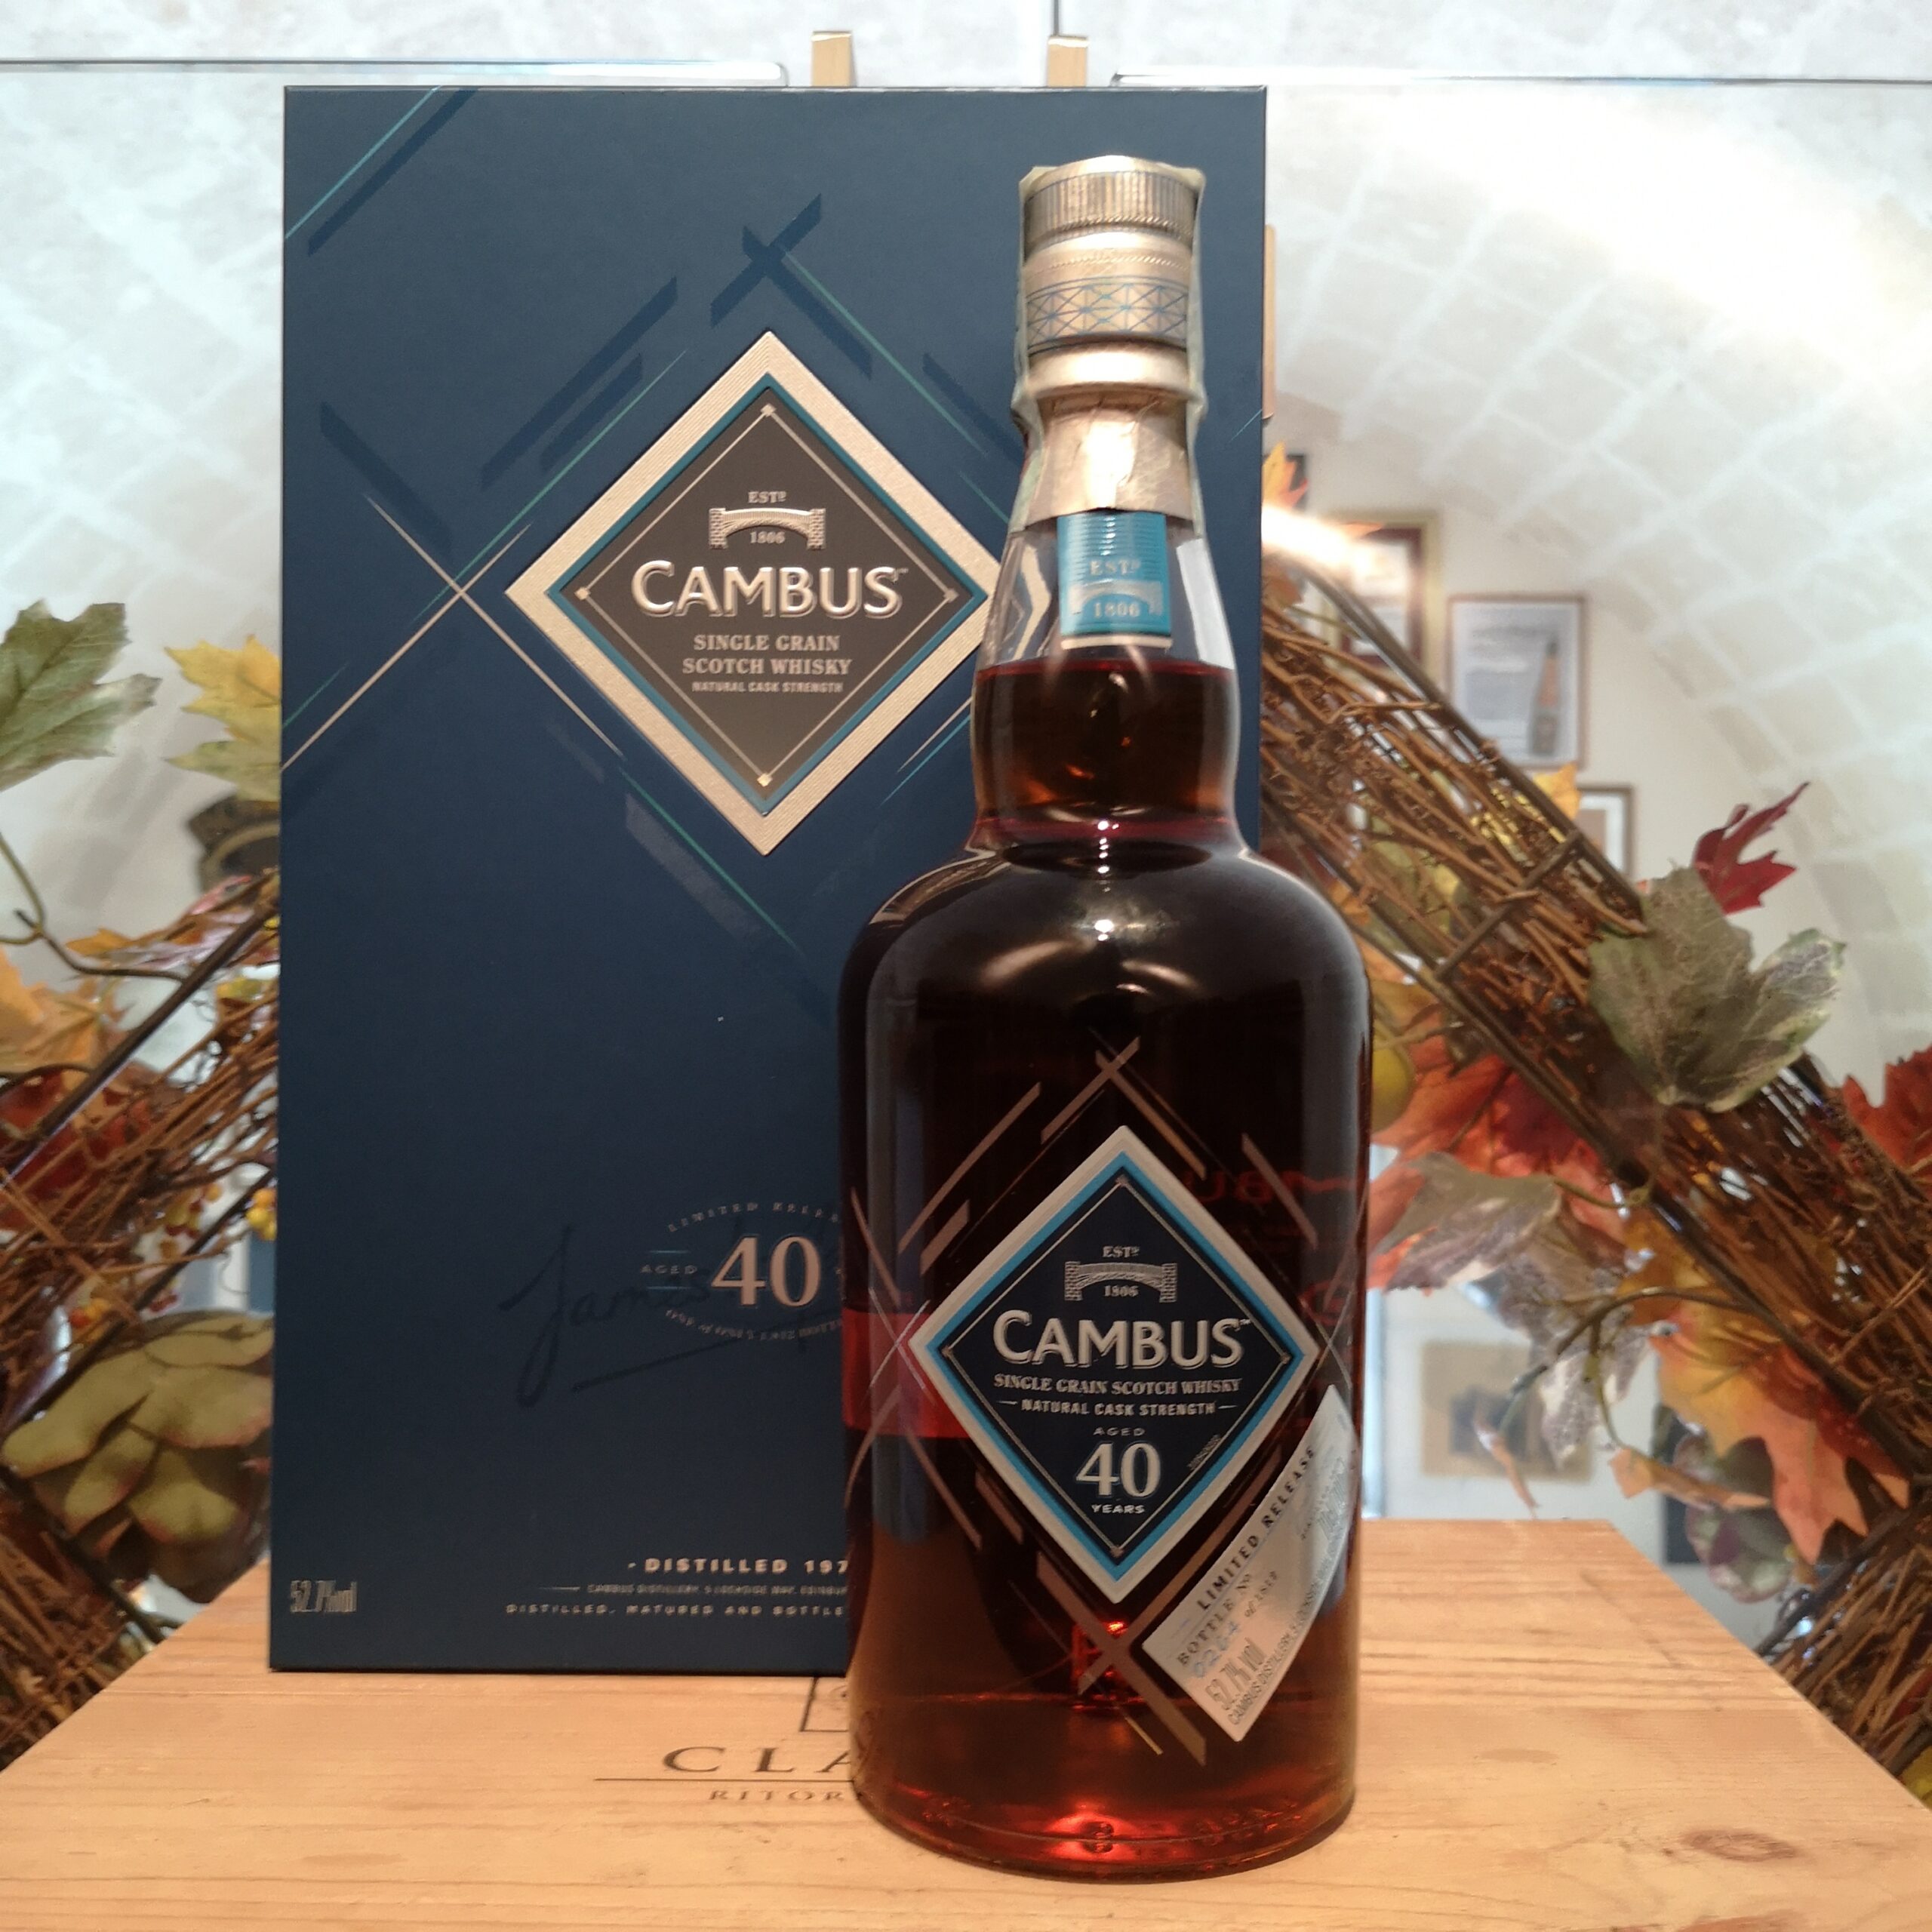 Cambus Single Grain Scotch Whisky 1975 40 YO S.R. 2016